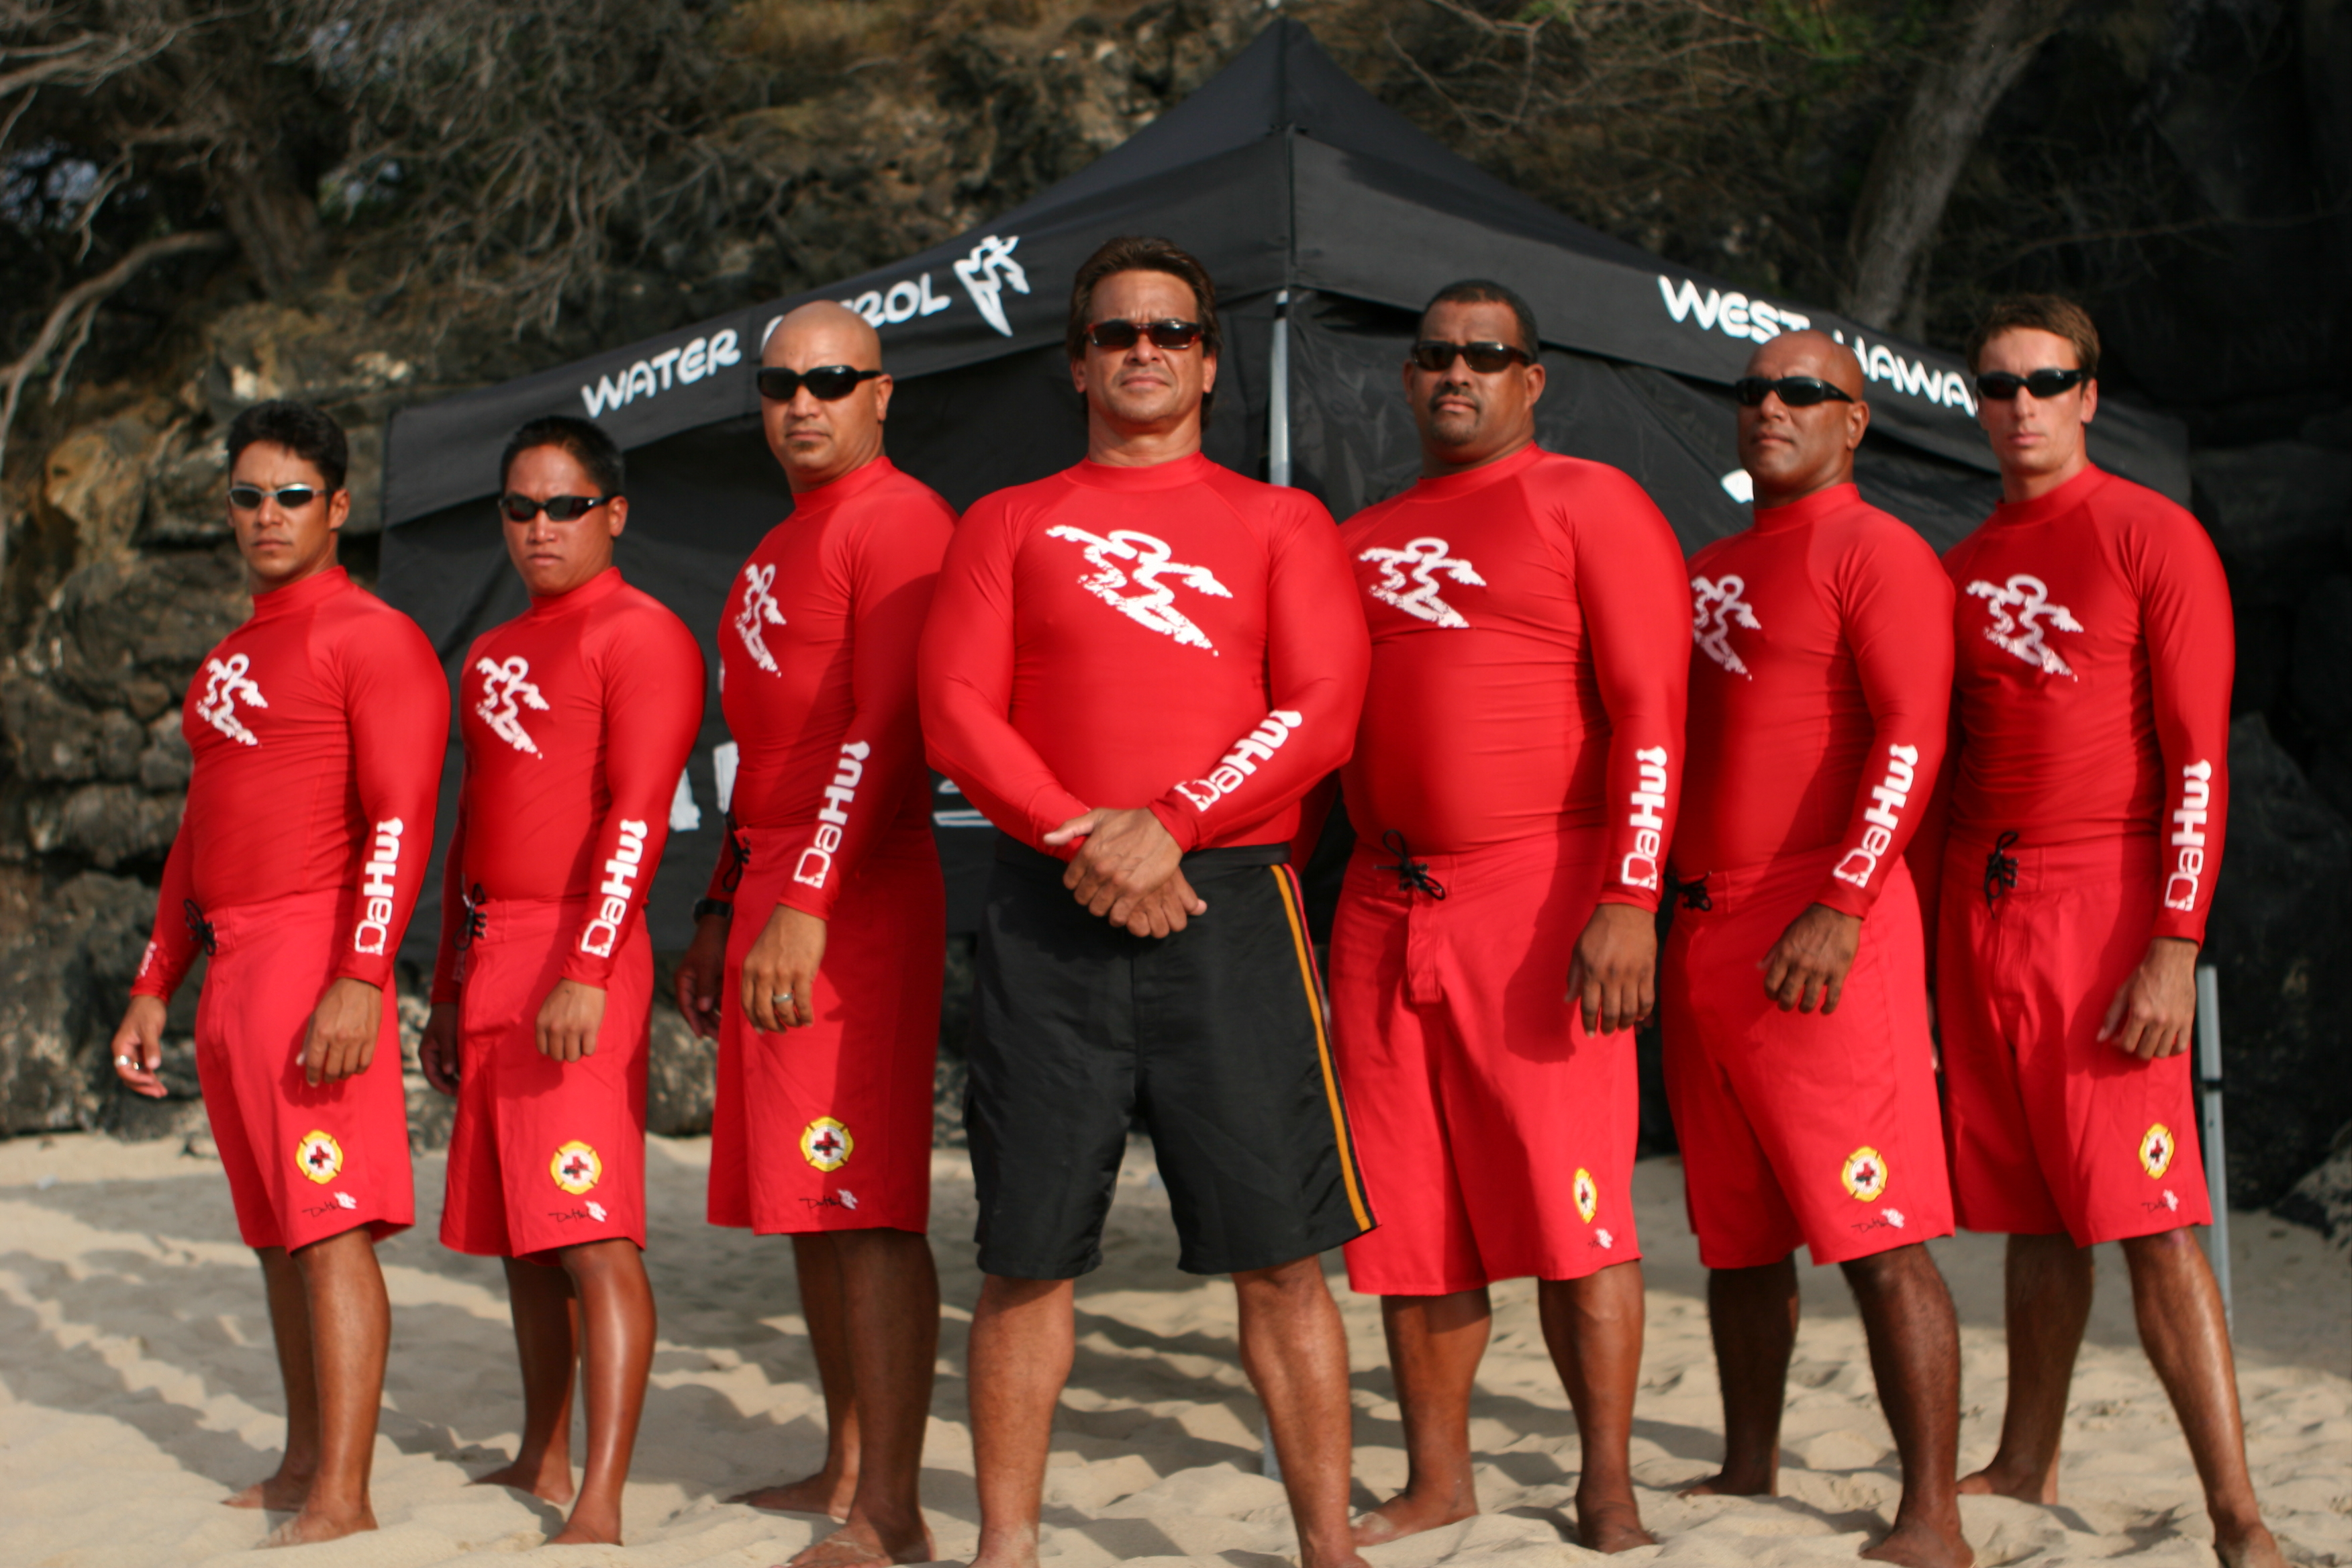 West Hawaii Water Patrol Lifeguard Crew